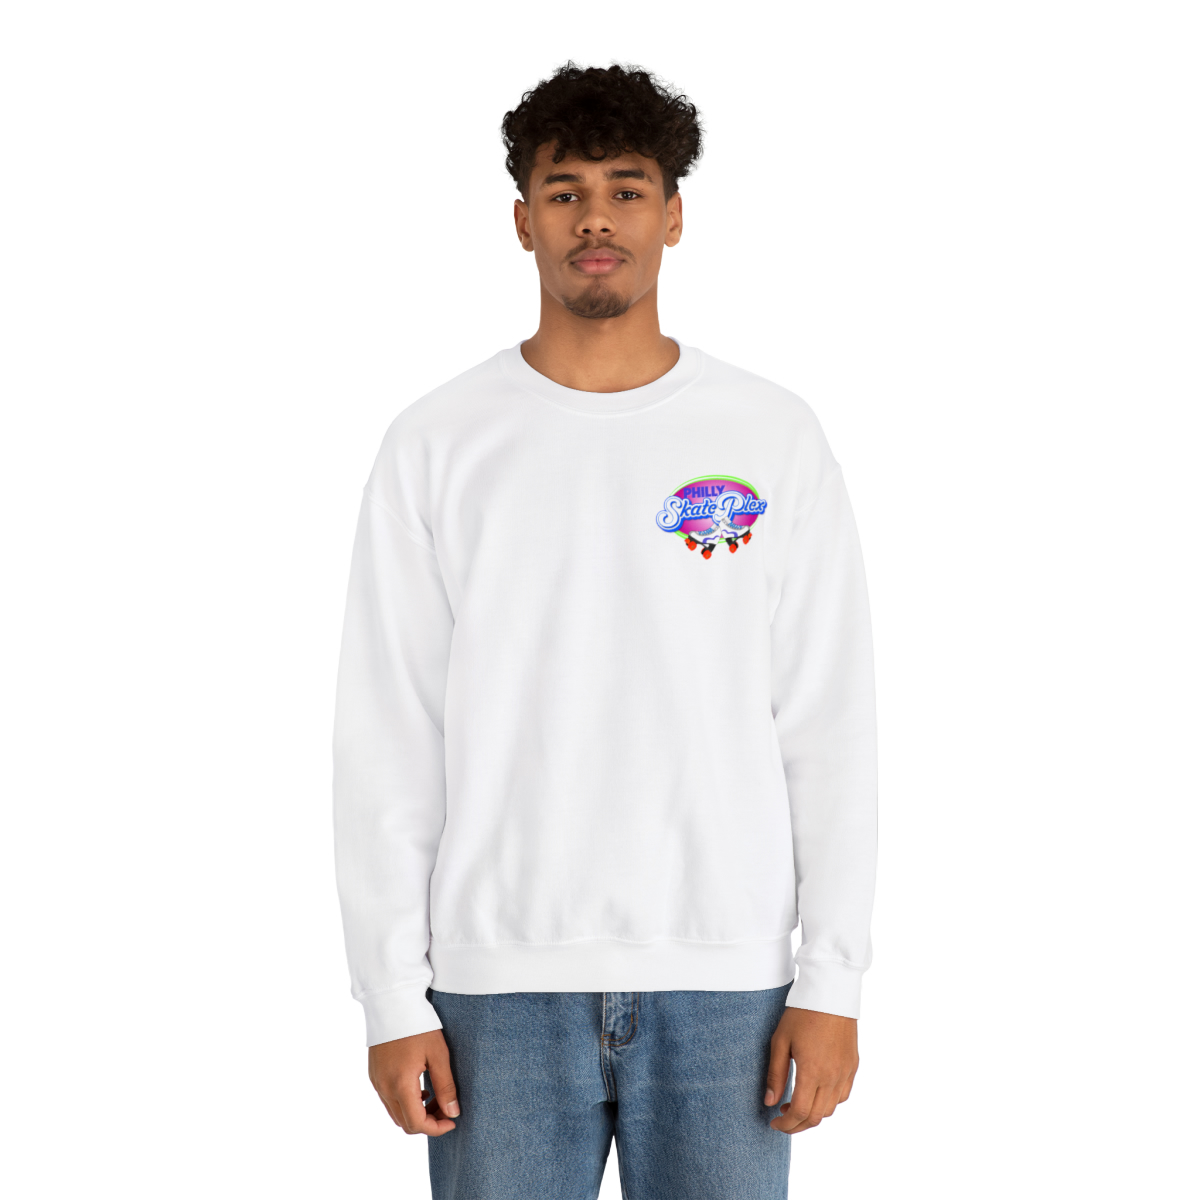 Crew-Neck Sweatshirt with Brand Print